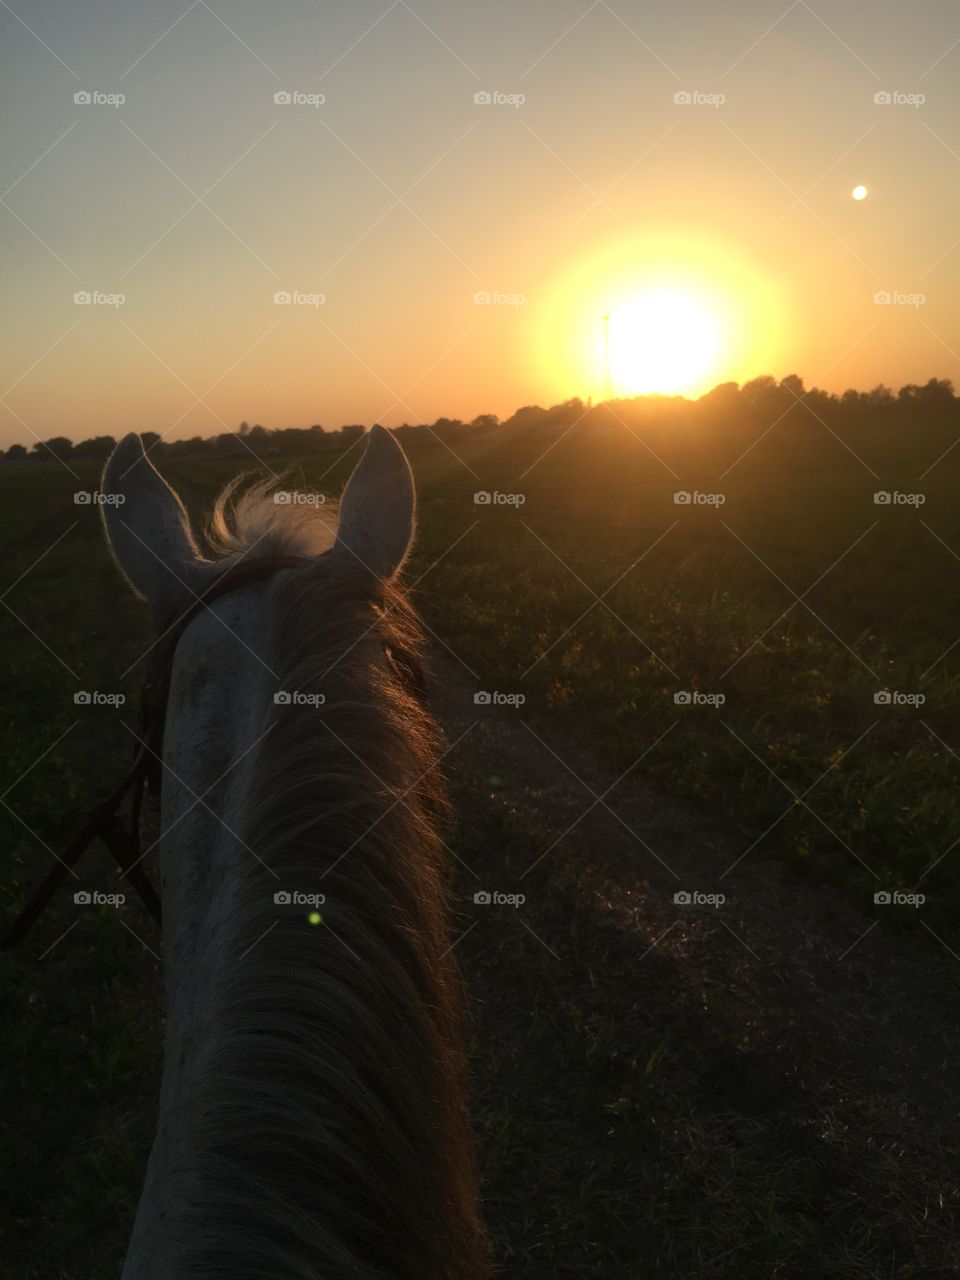 Horseback riding at sunset